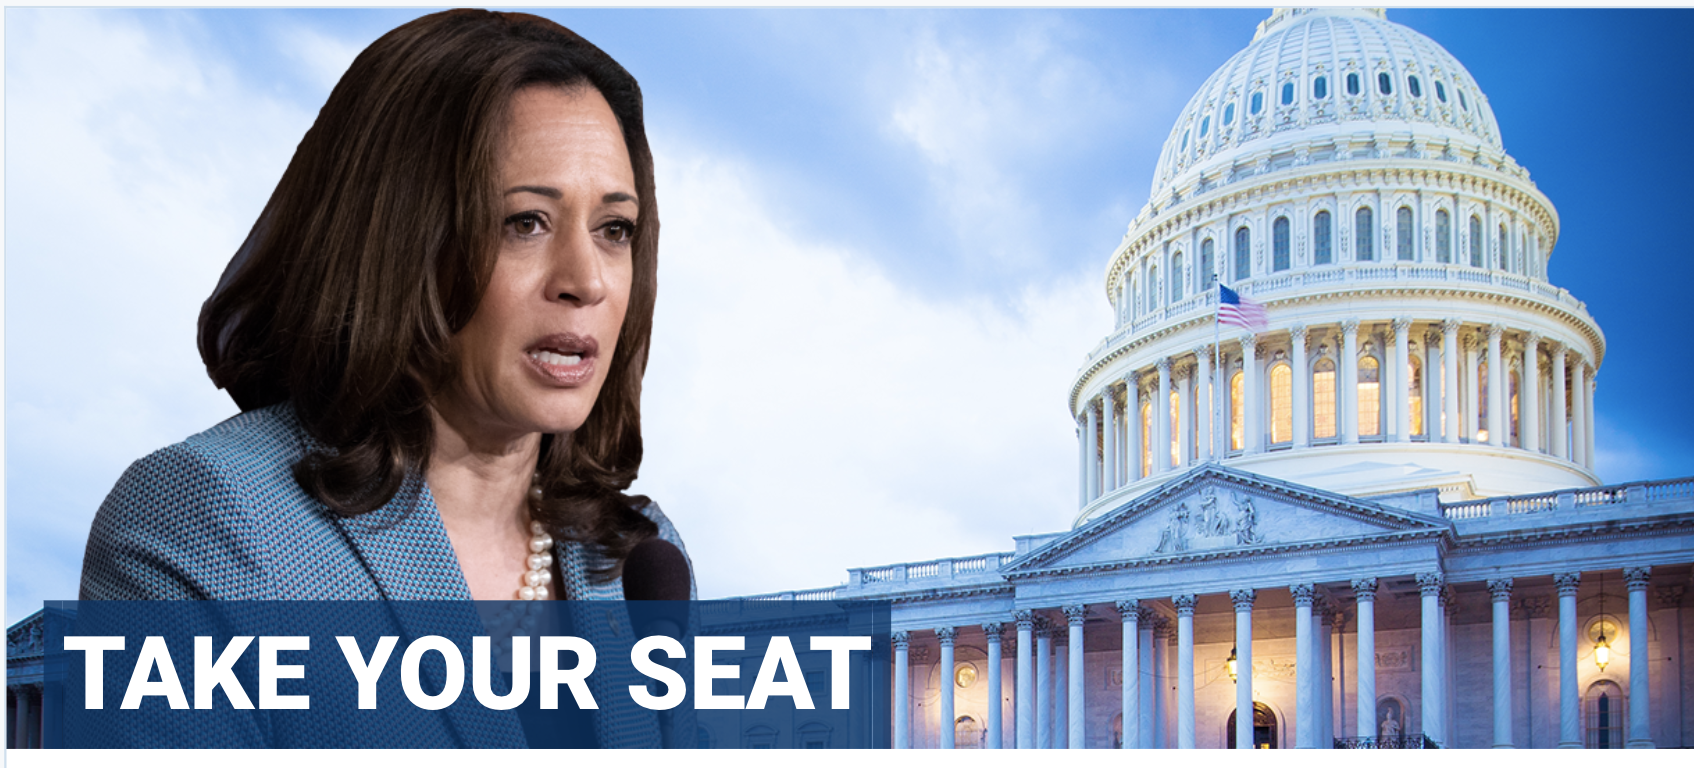 Democrat Kamala Harris could lose seat on Senate Judiciary Committee, report says